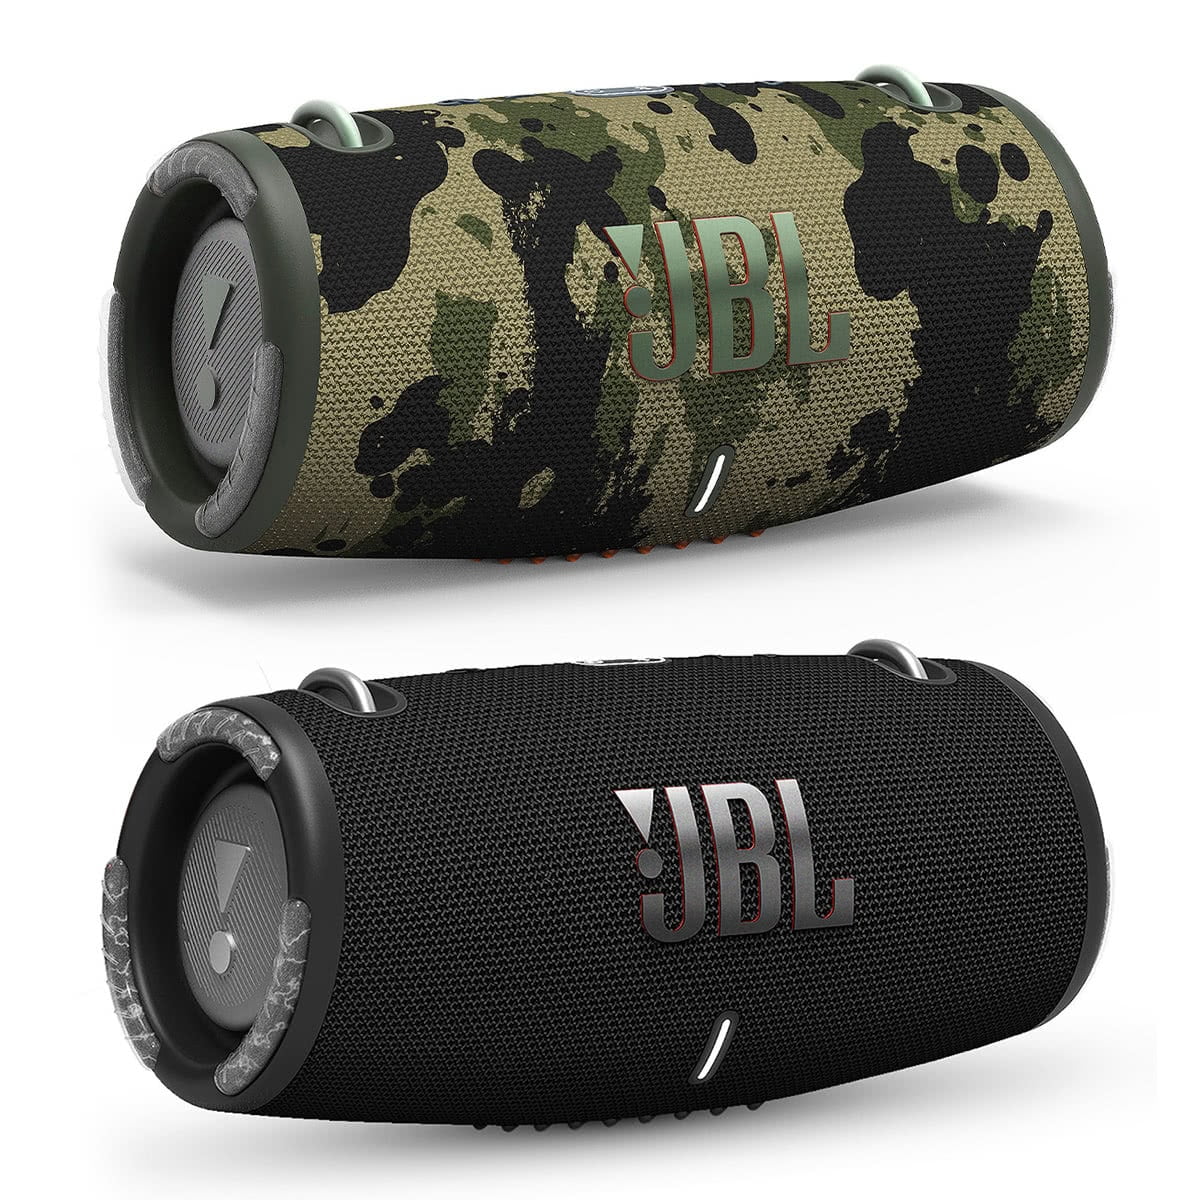 JBL XTREME3 Portable Bluetooth Speaker - Black